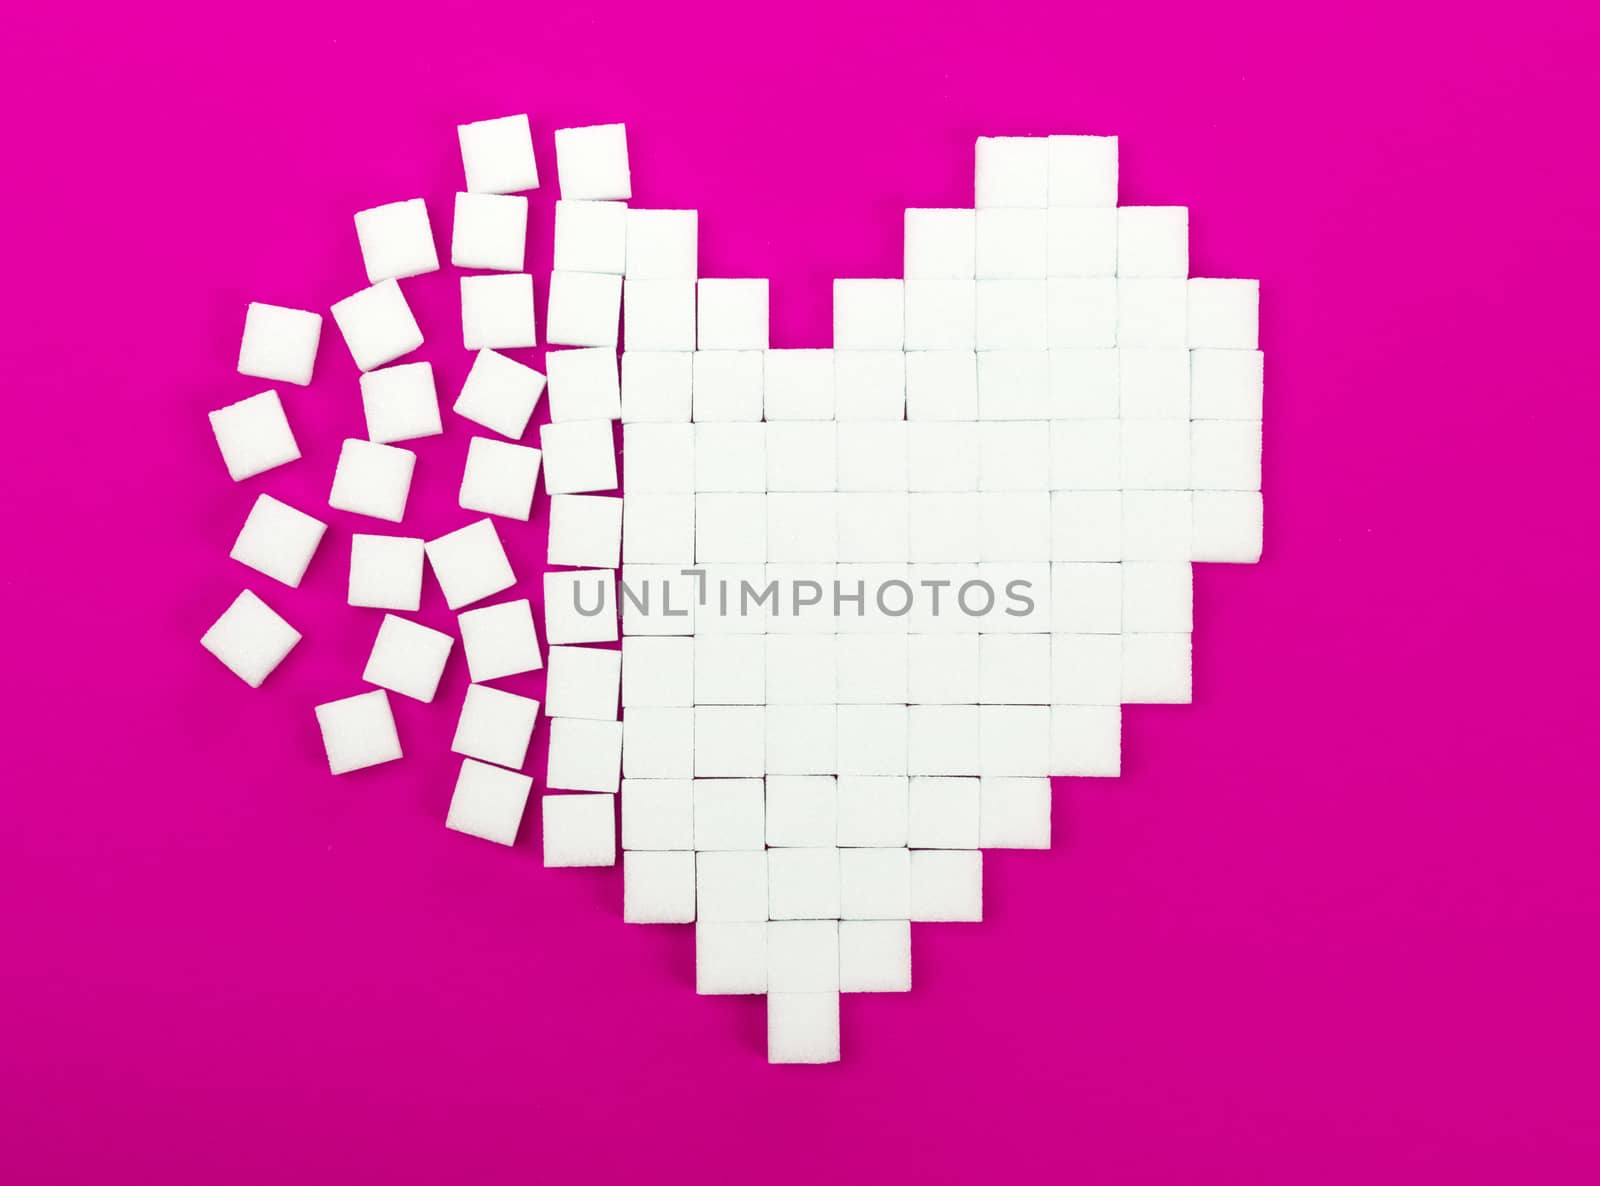 Broken heart made of sugar cubes by michaklootwijk